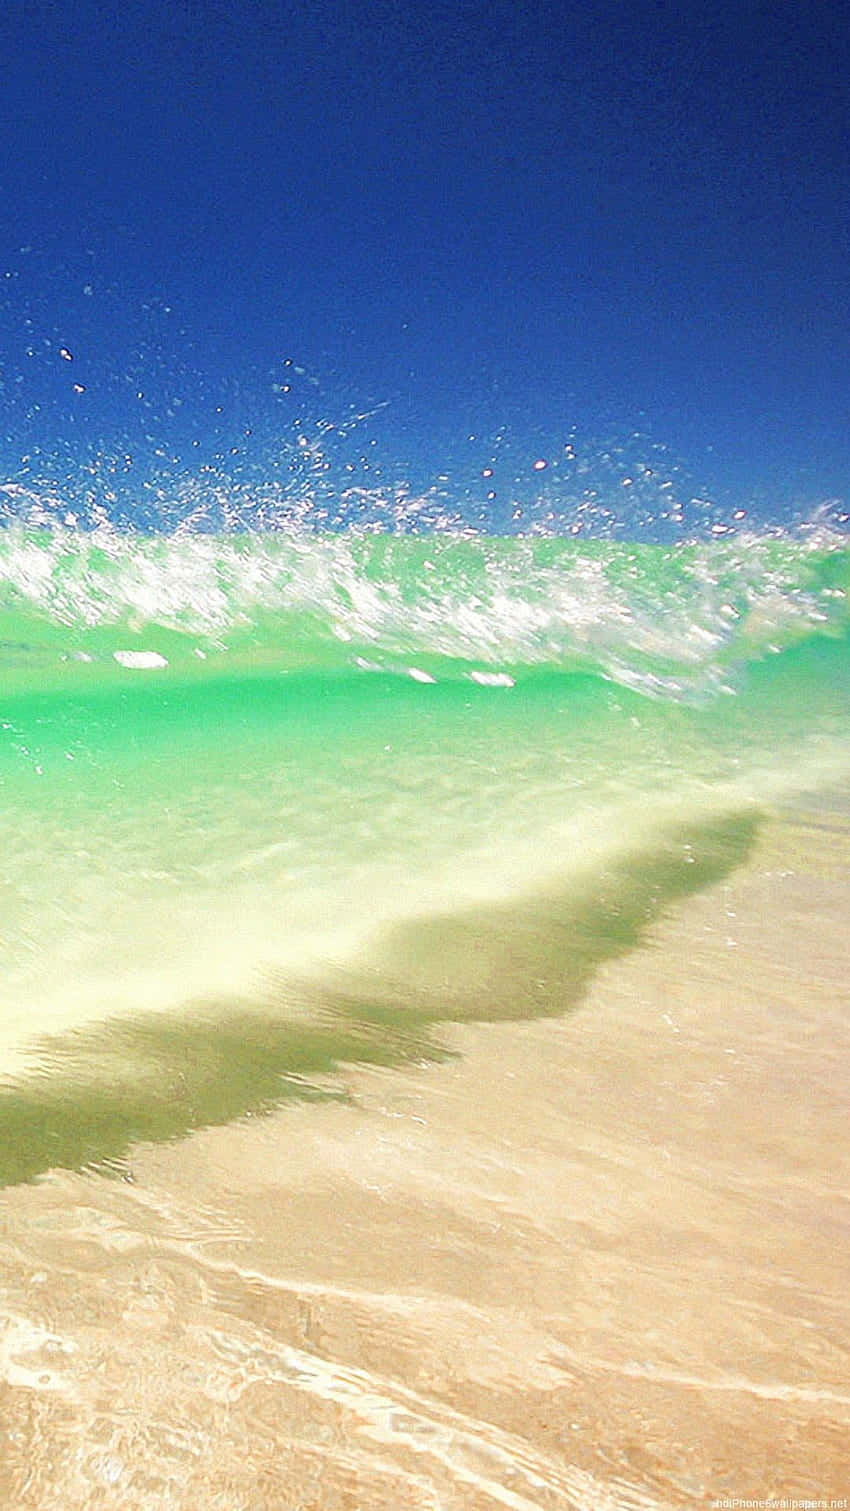 Take a Break - Surf and Sun on a Beautiful Beach Wallpaper